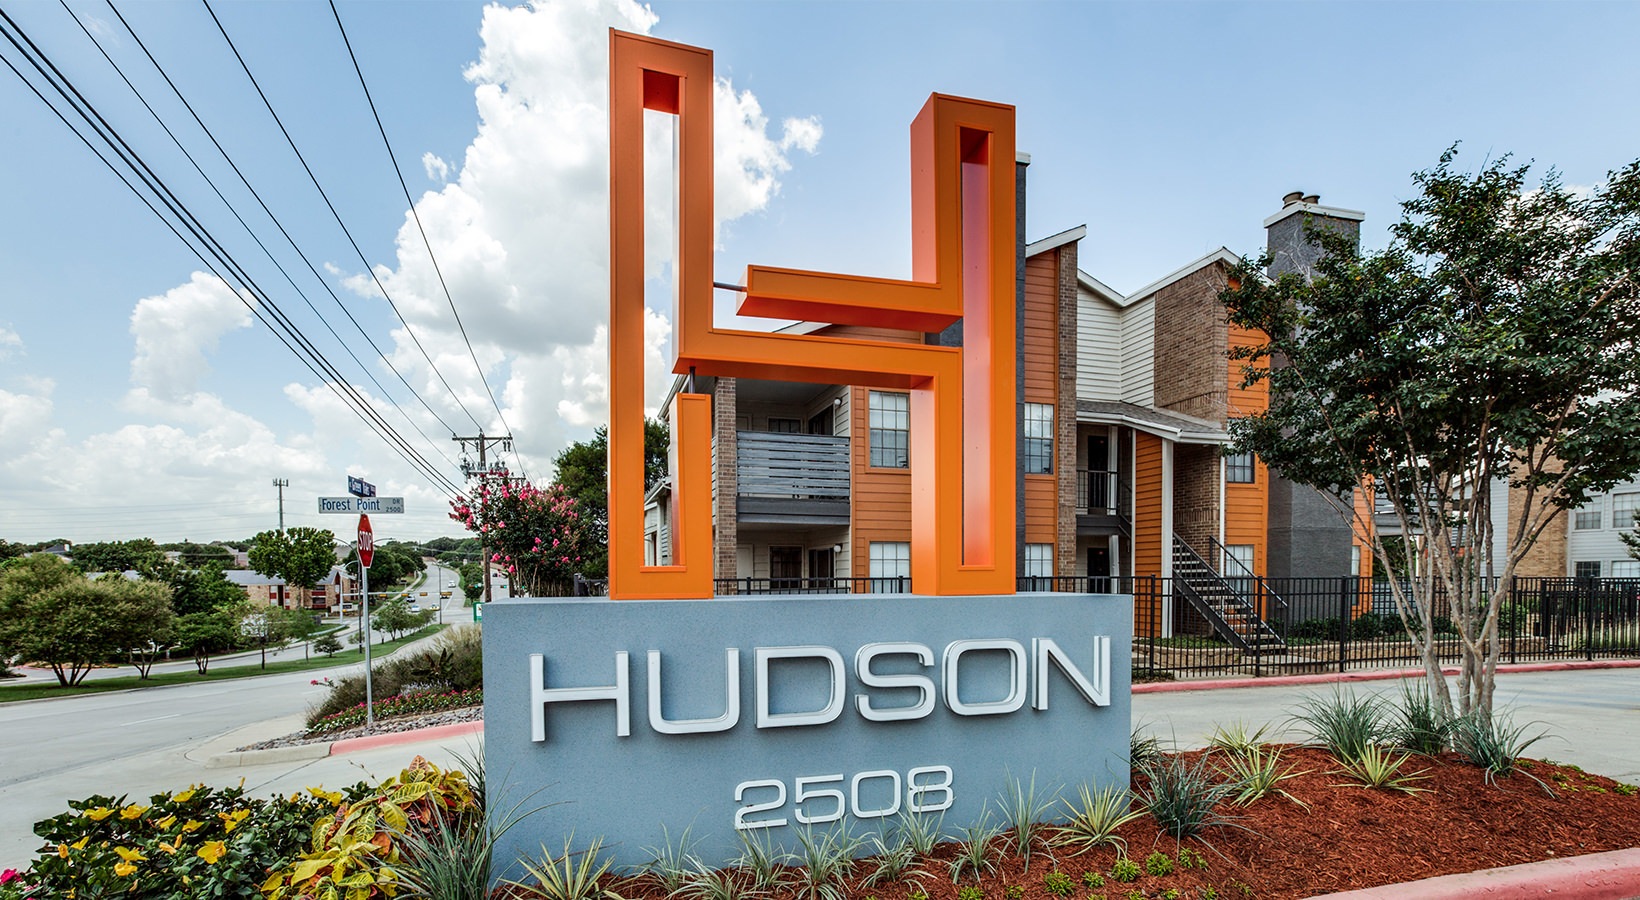 hudson apartments in houston, tx at The Hudson